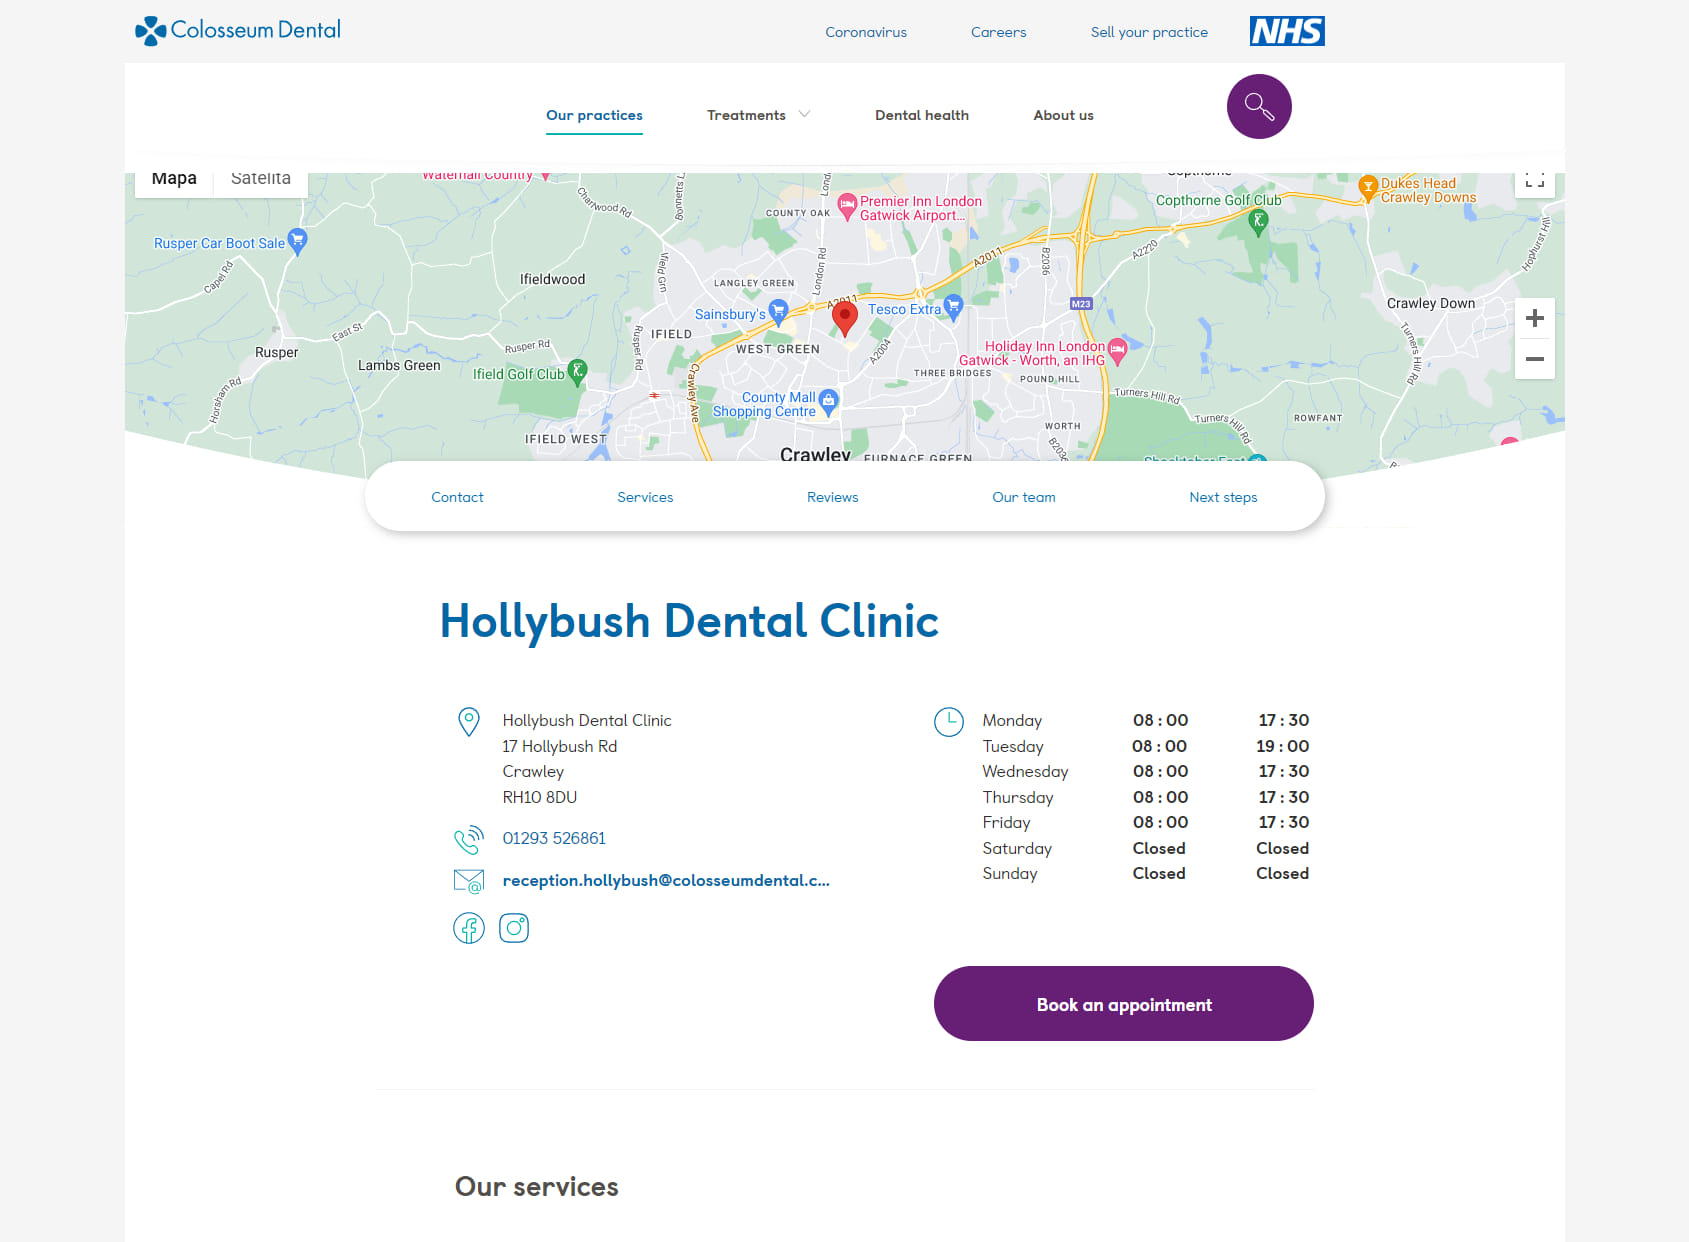 Hollybush Dental Clinic